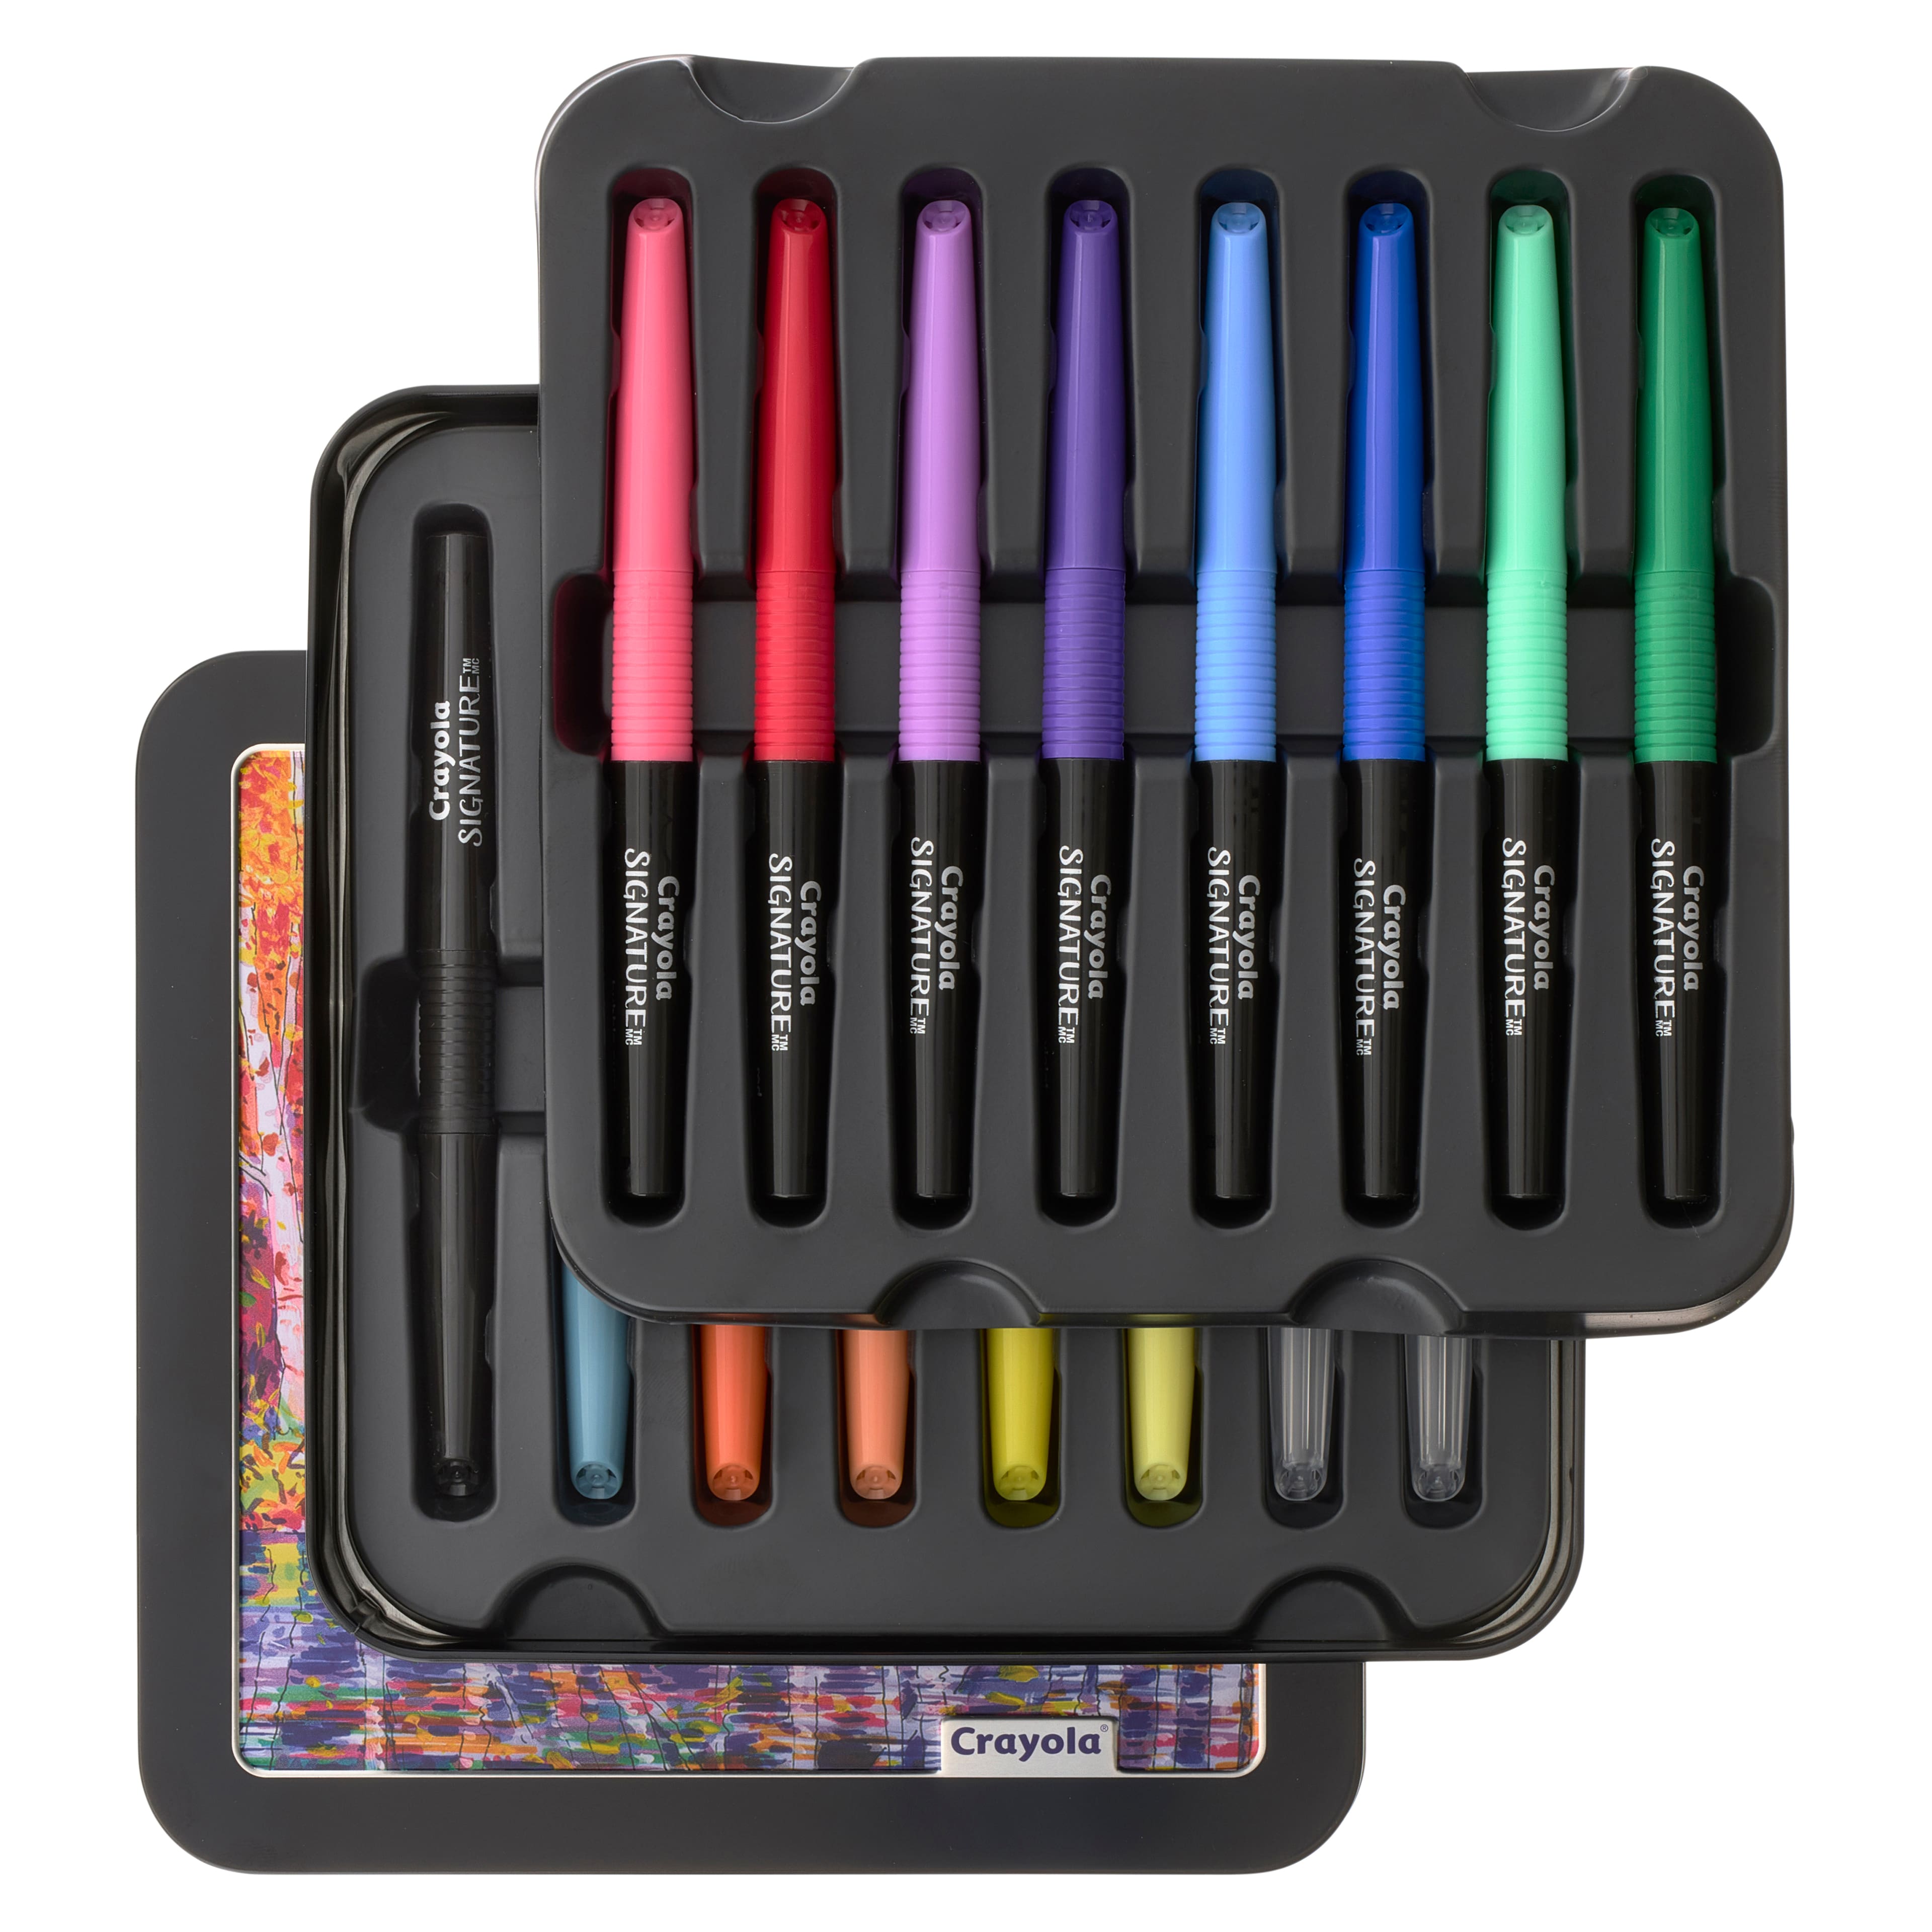 Crayola&#xAE; Signature&#x2122; Blending Markers, 16ct.